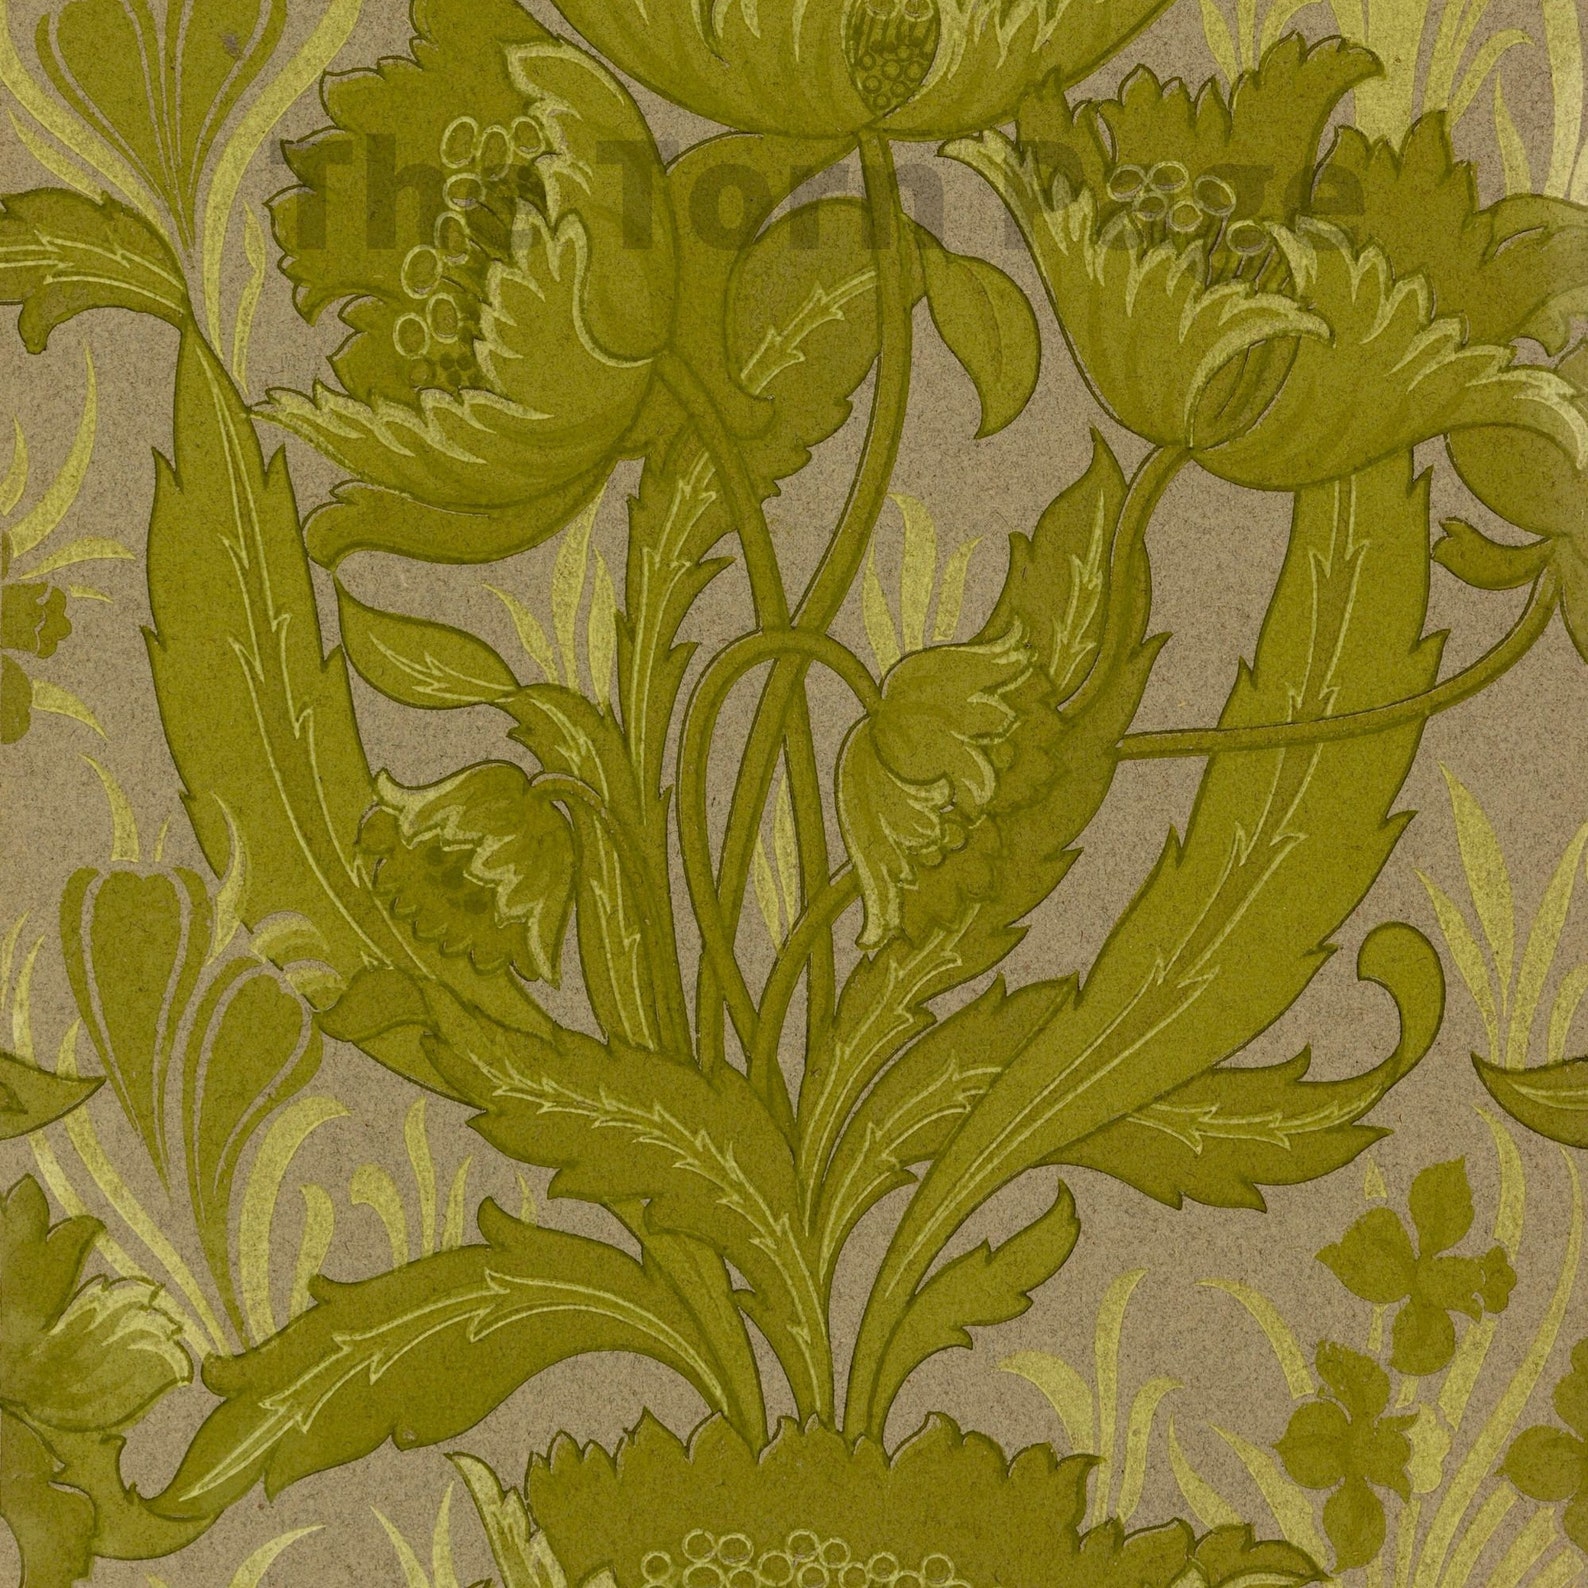 Art Nouveau Wallpapers Vintage Digital Papers Junk Journal Etsy